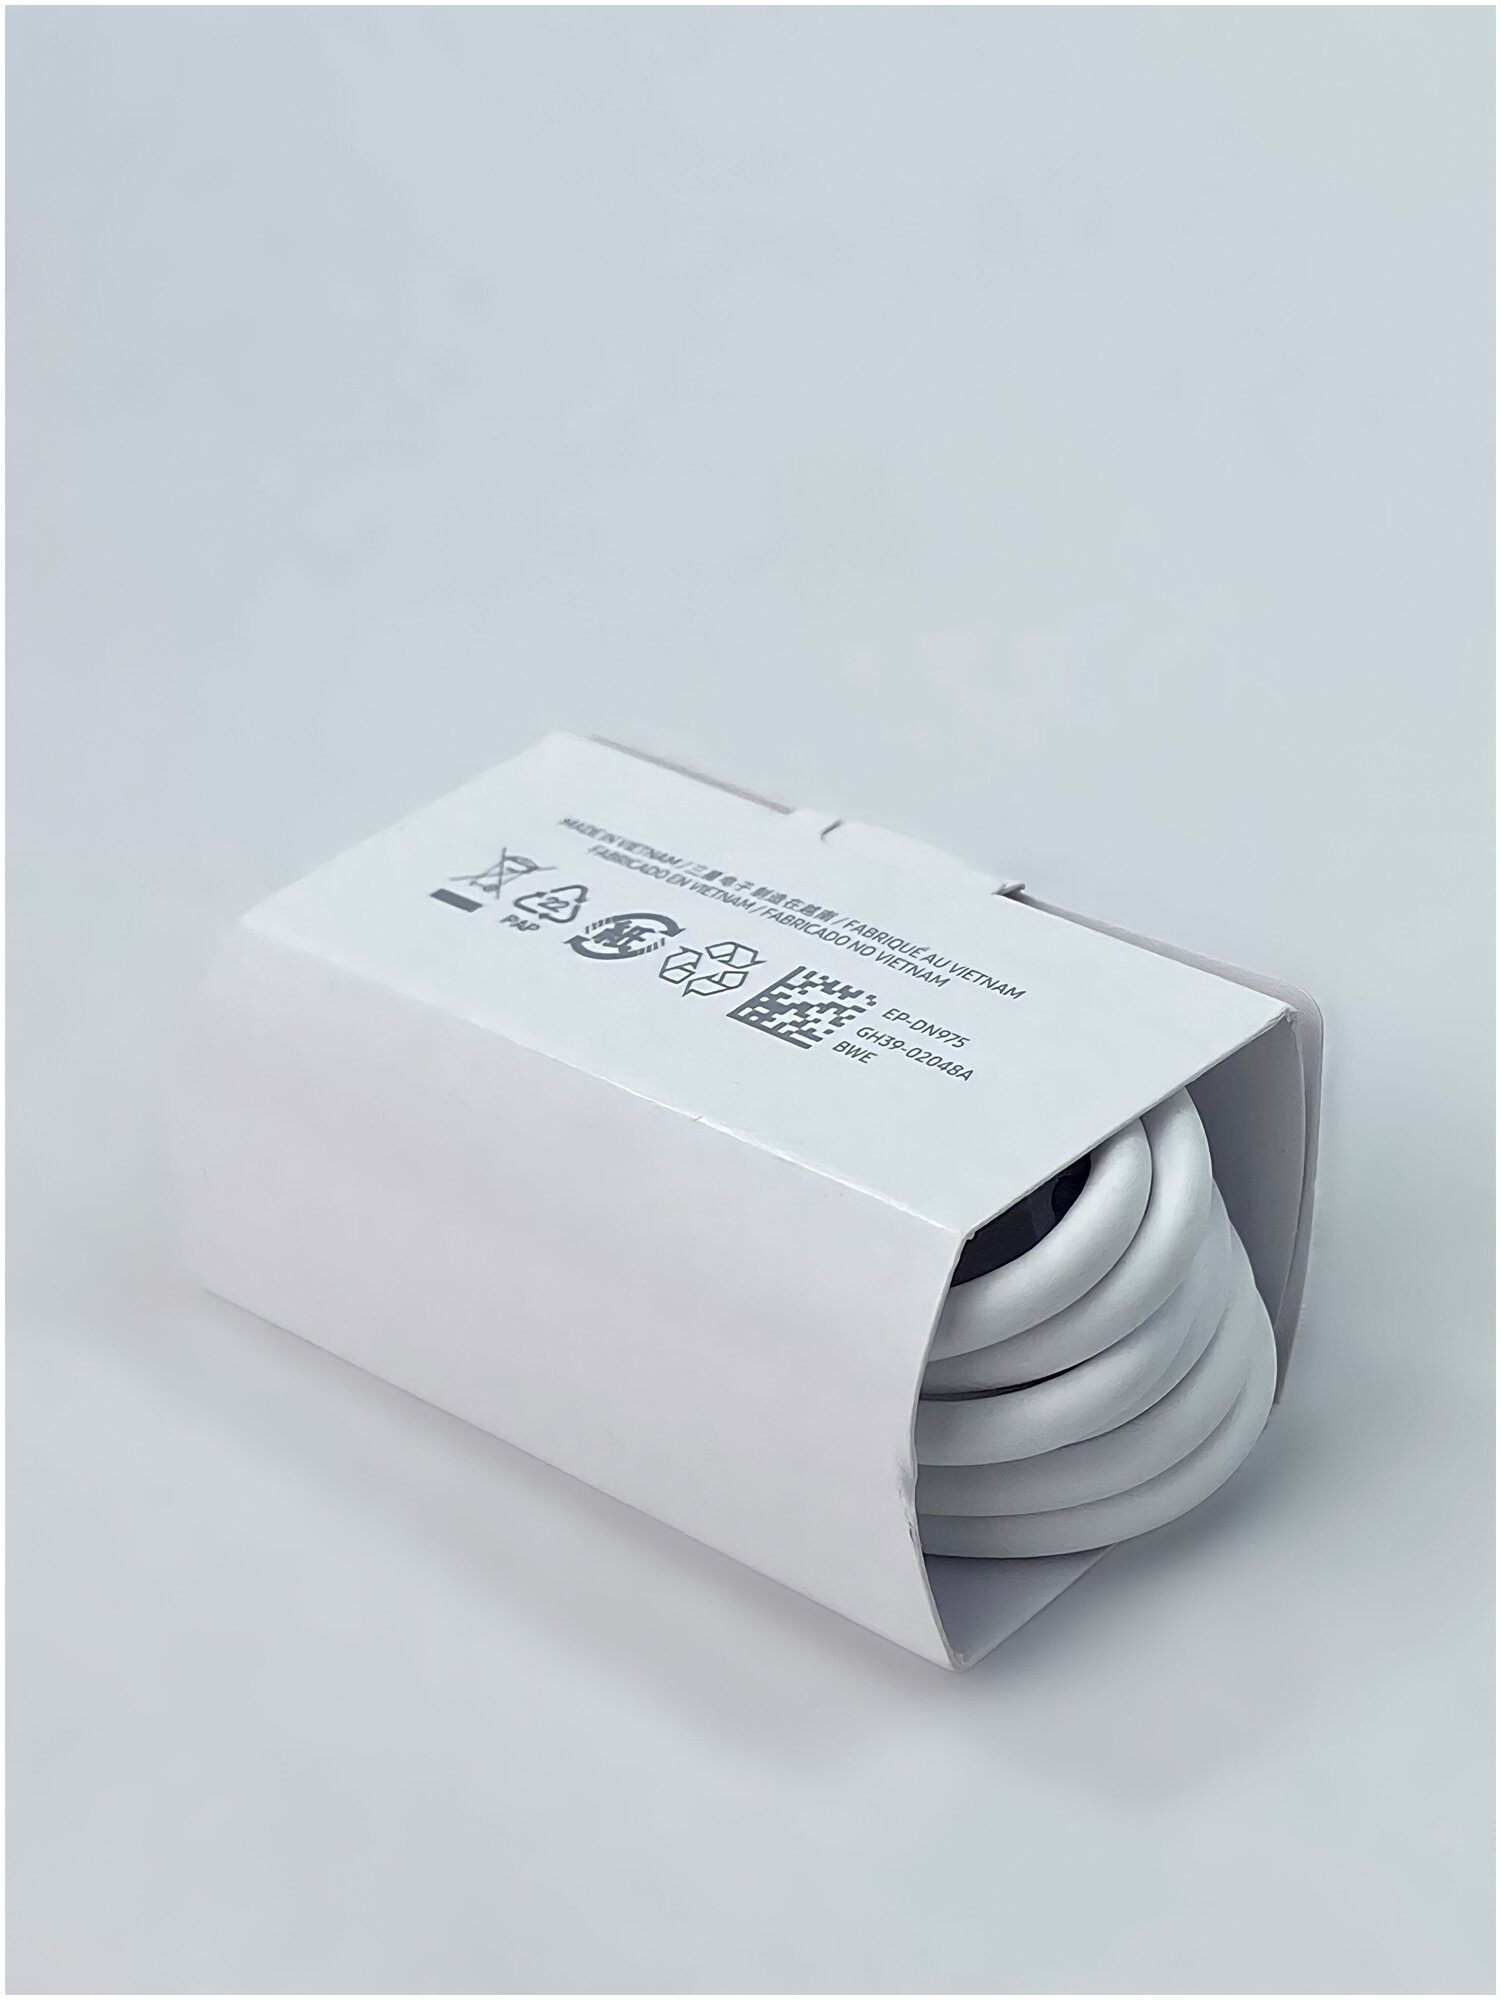 Кабель для Samsung USB Type-C- USB Type-C (EP-DN975),1м. Белый